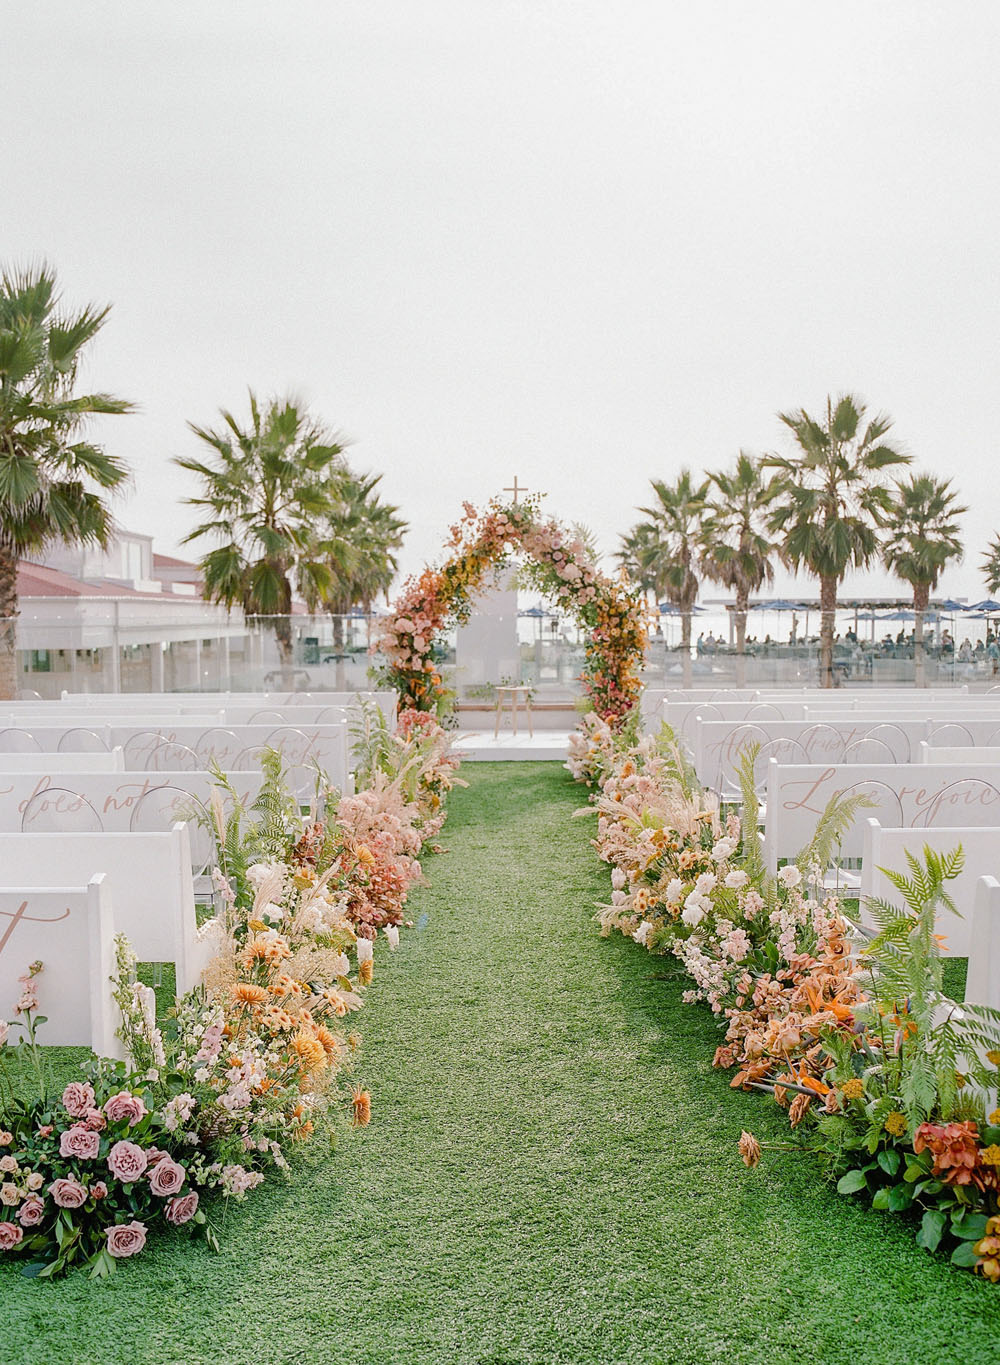 A beachy, bohemian wedding in San Diego